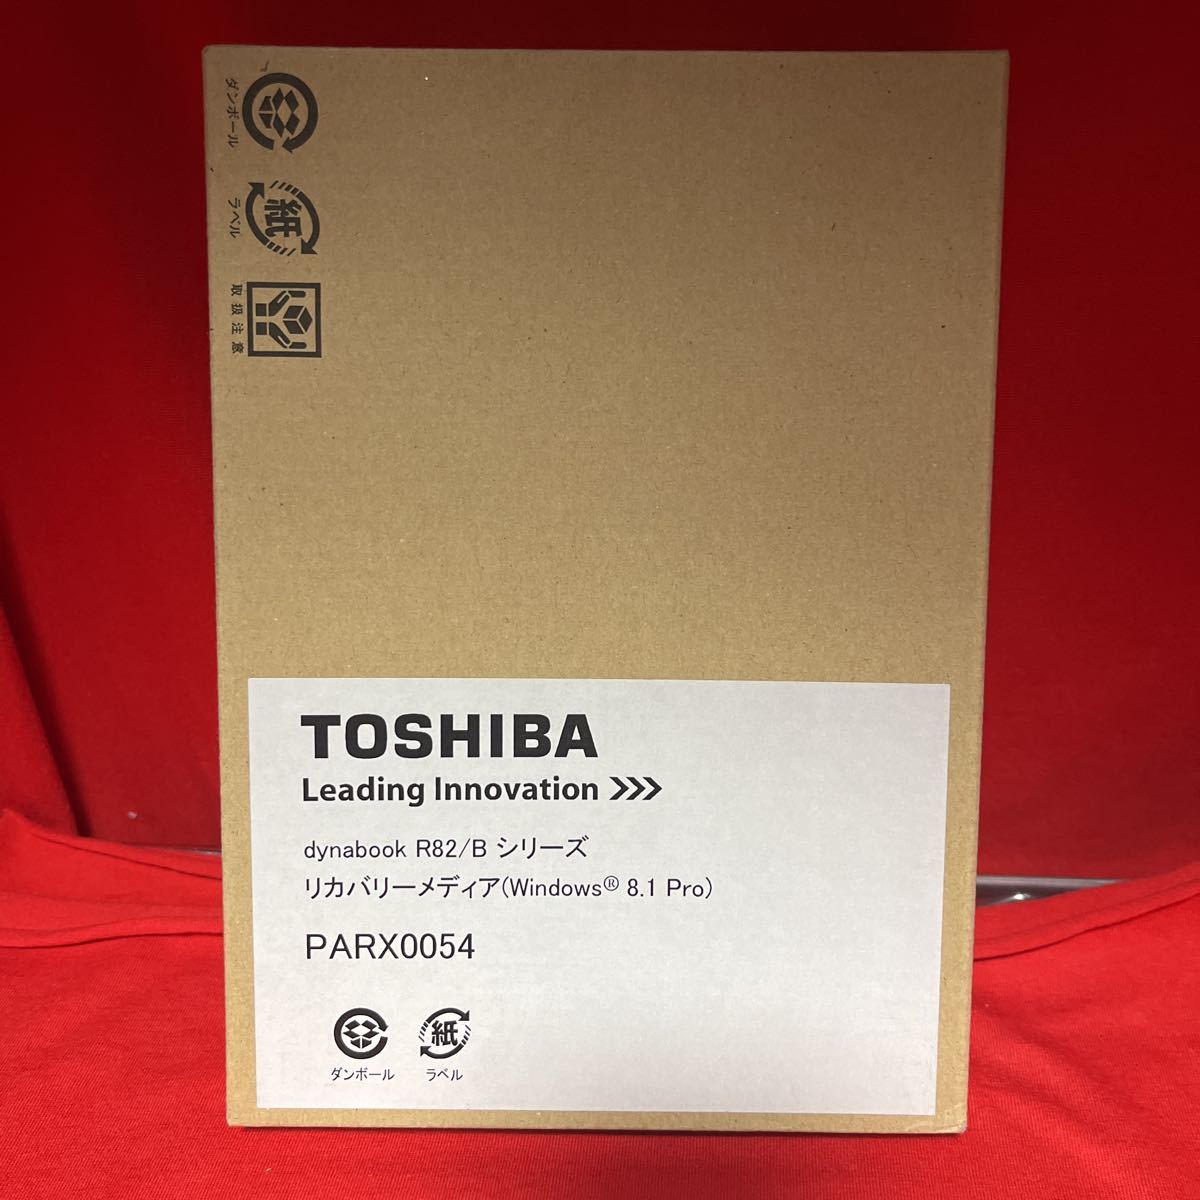 TOSHIBA Dynabook R82/B シリーズ リカバリーメディア(windows 8.1 Pro) PARX0054_画像1